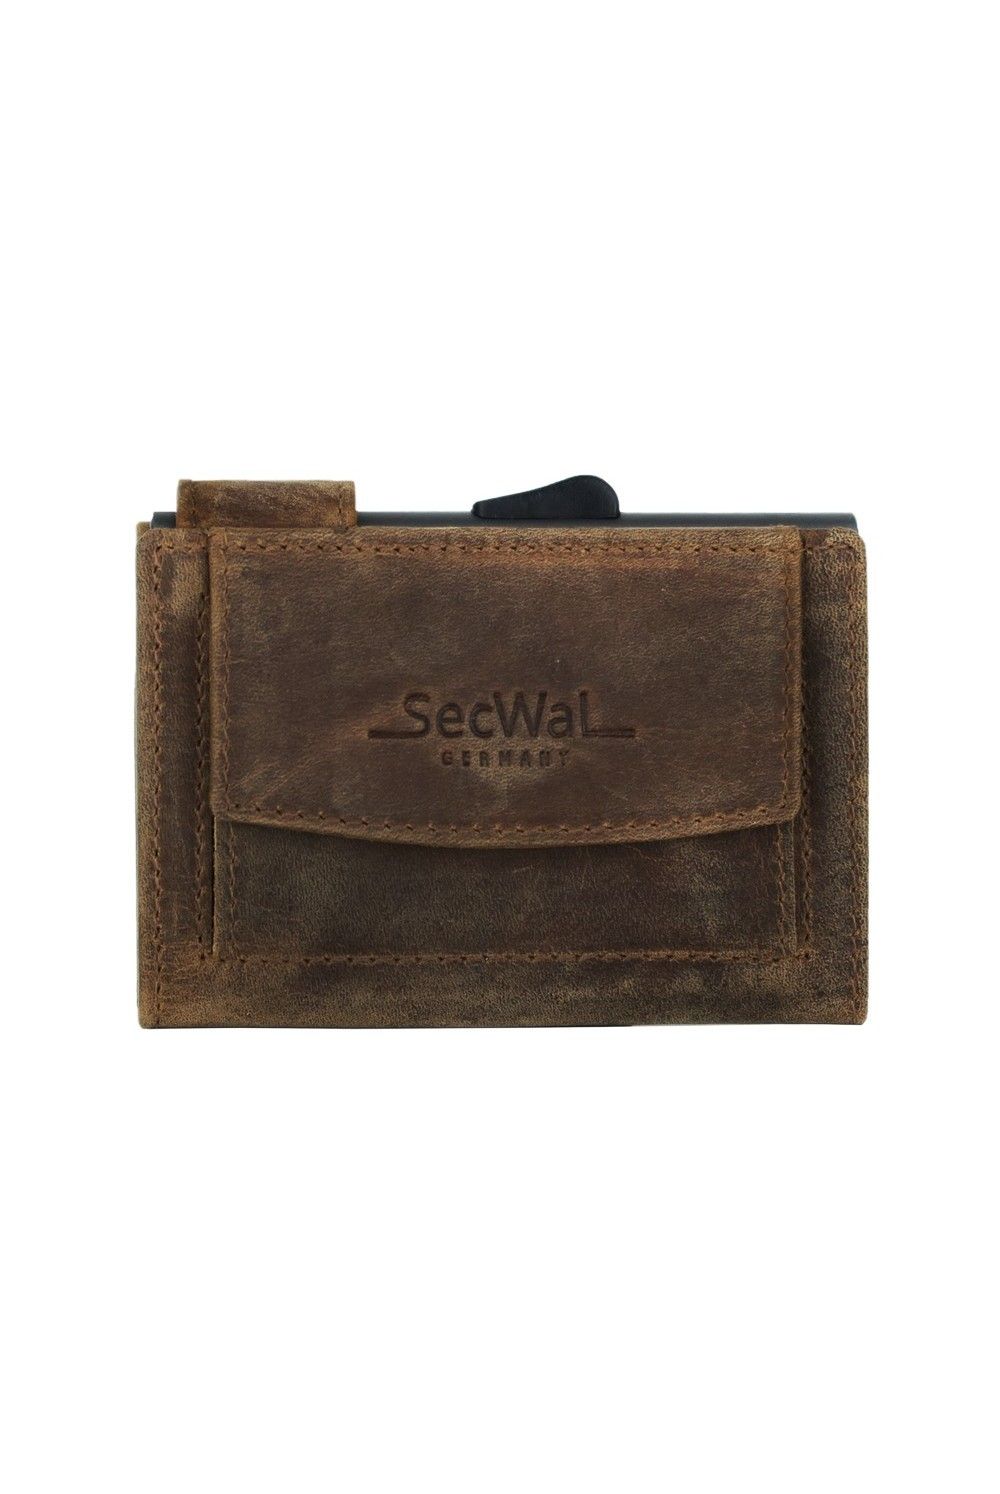 Porte-cartes SecWal DK Leather Hunter Marron